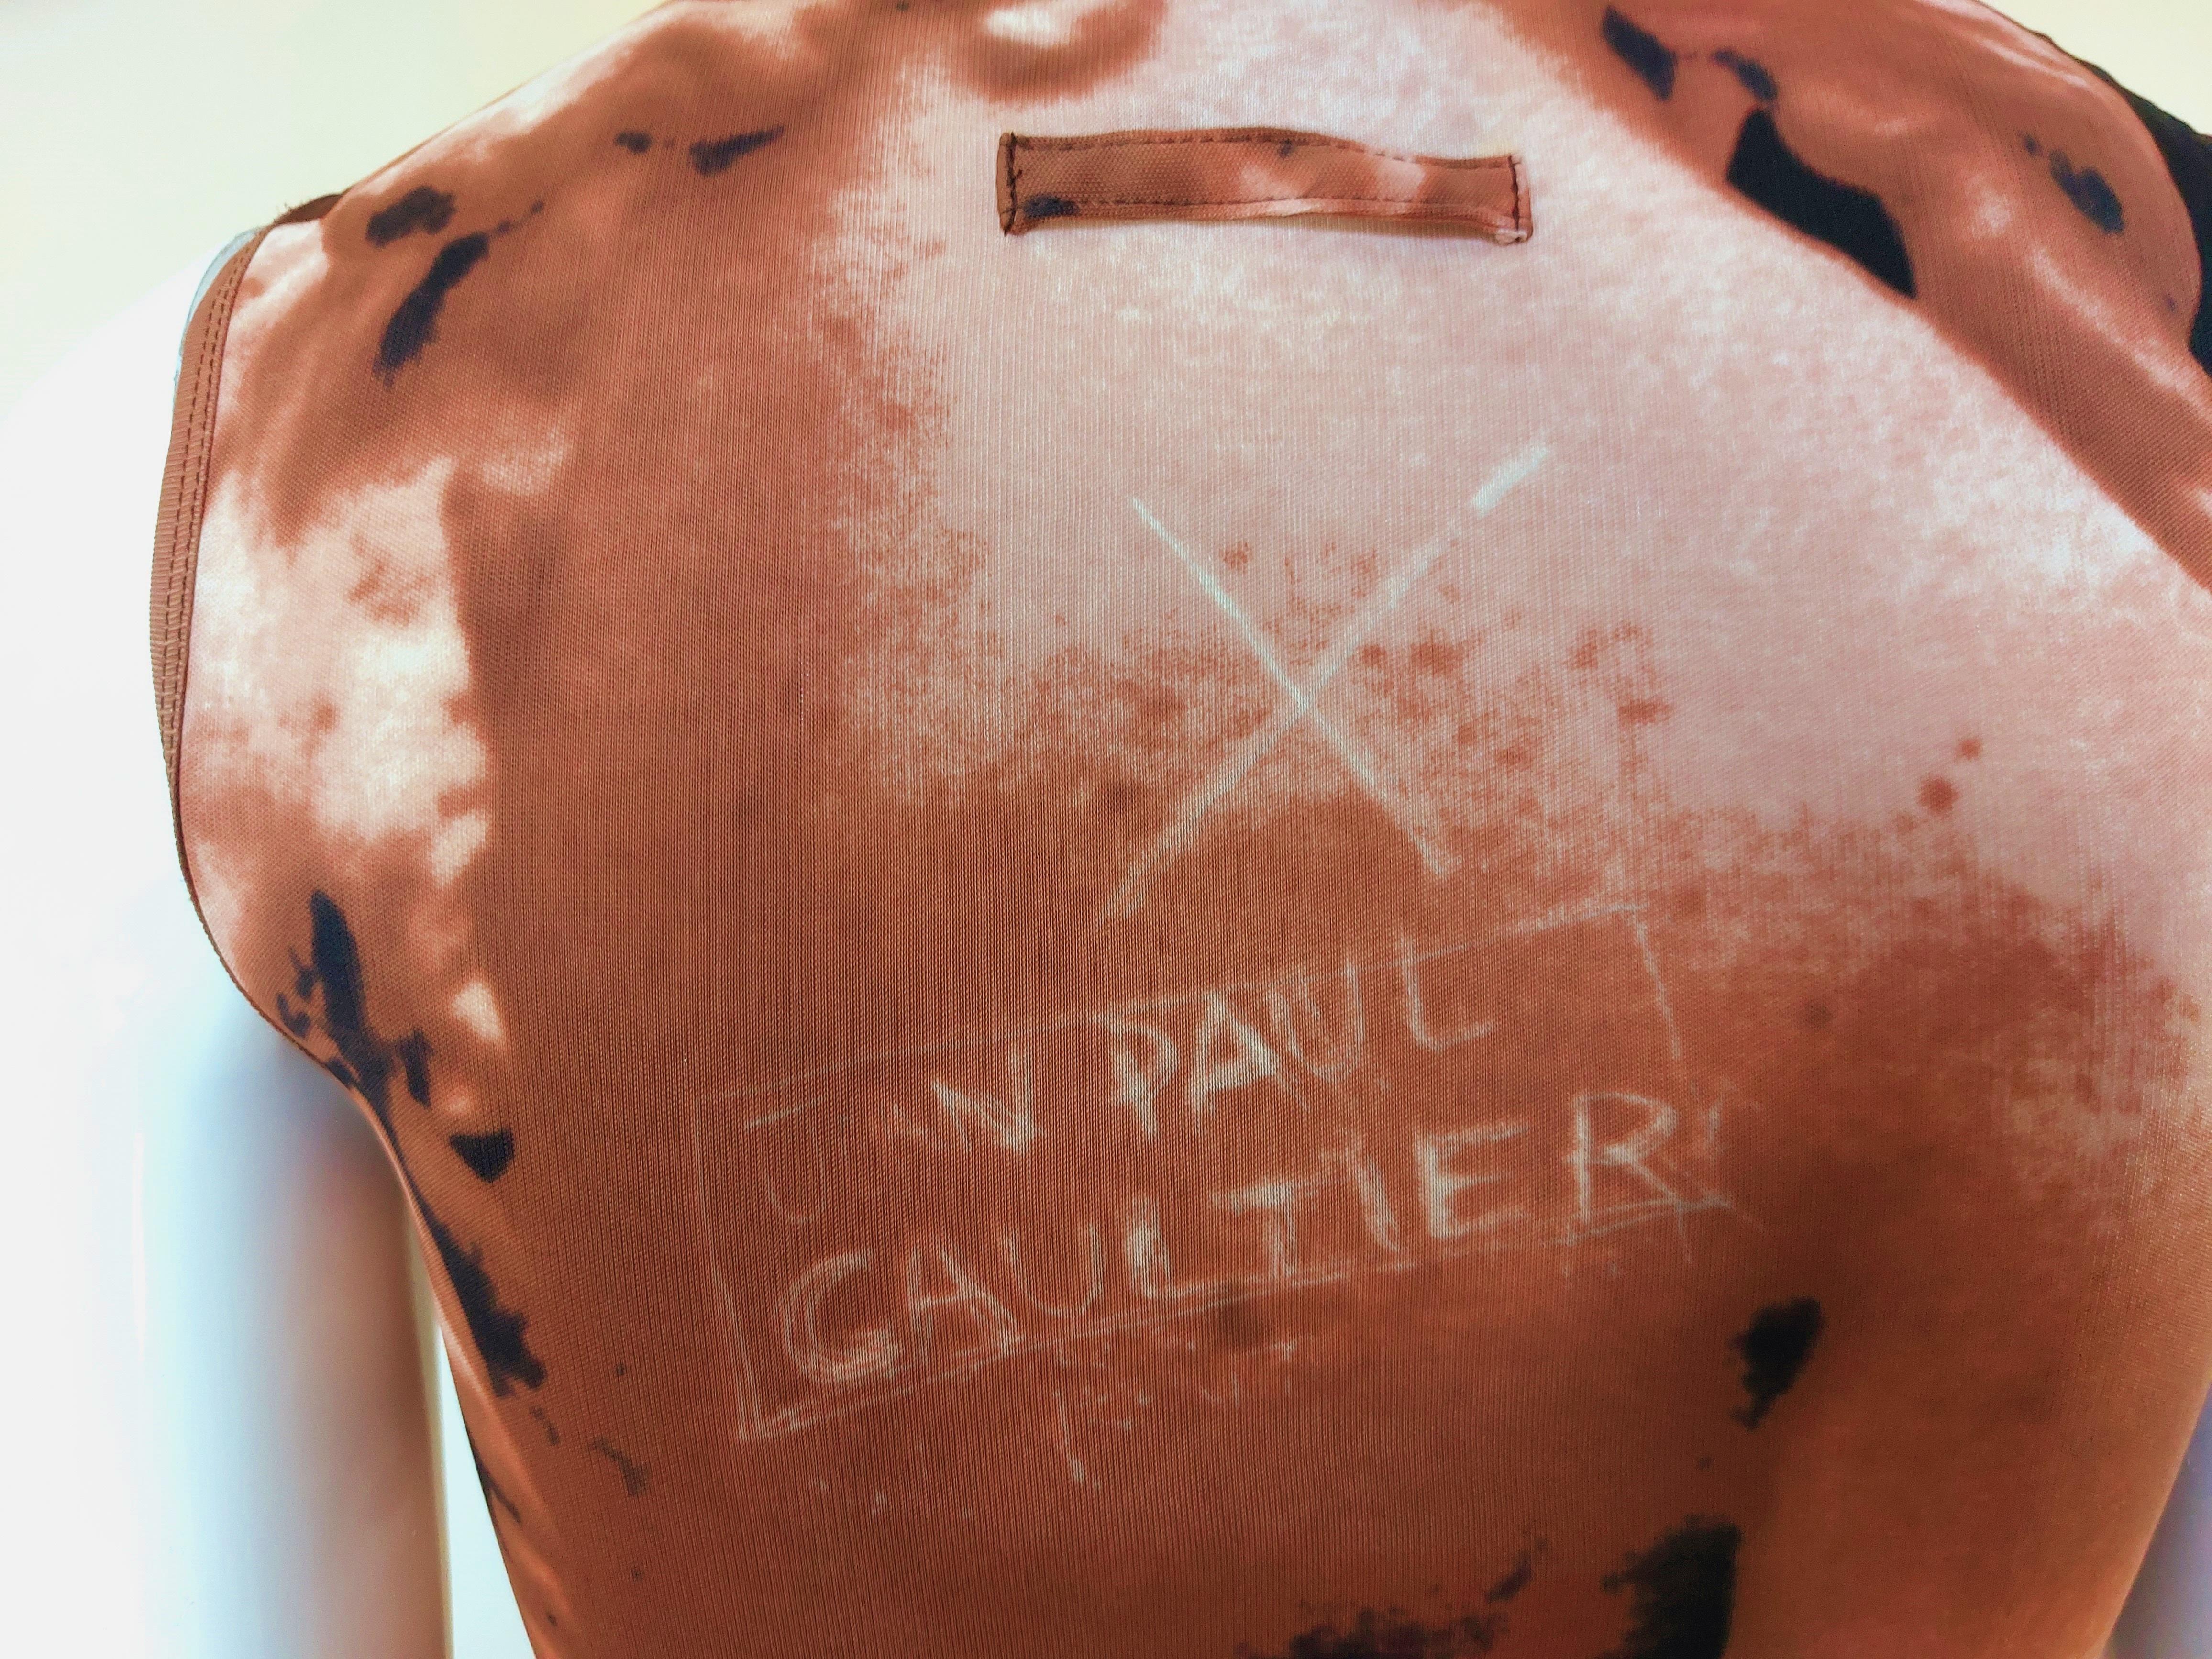 Jean Paul Gaultier S1999 Graffiti Goddess Venus Nude Trompe L'oeil Runway Dress For Sale 10